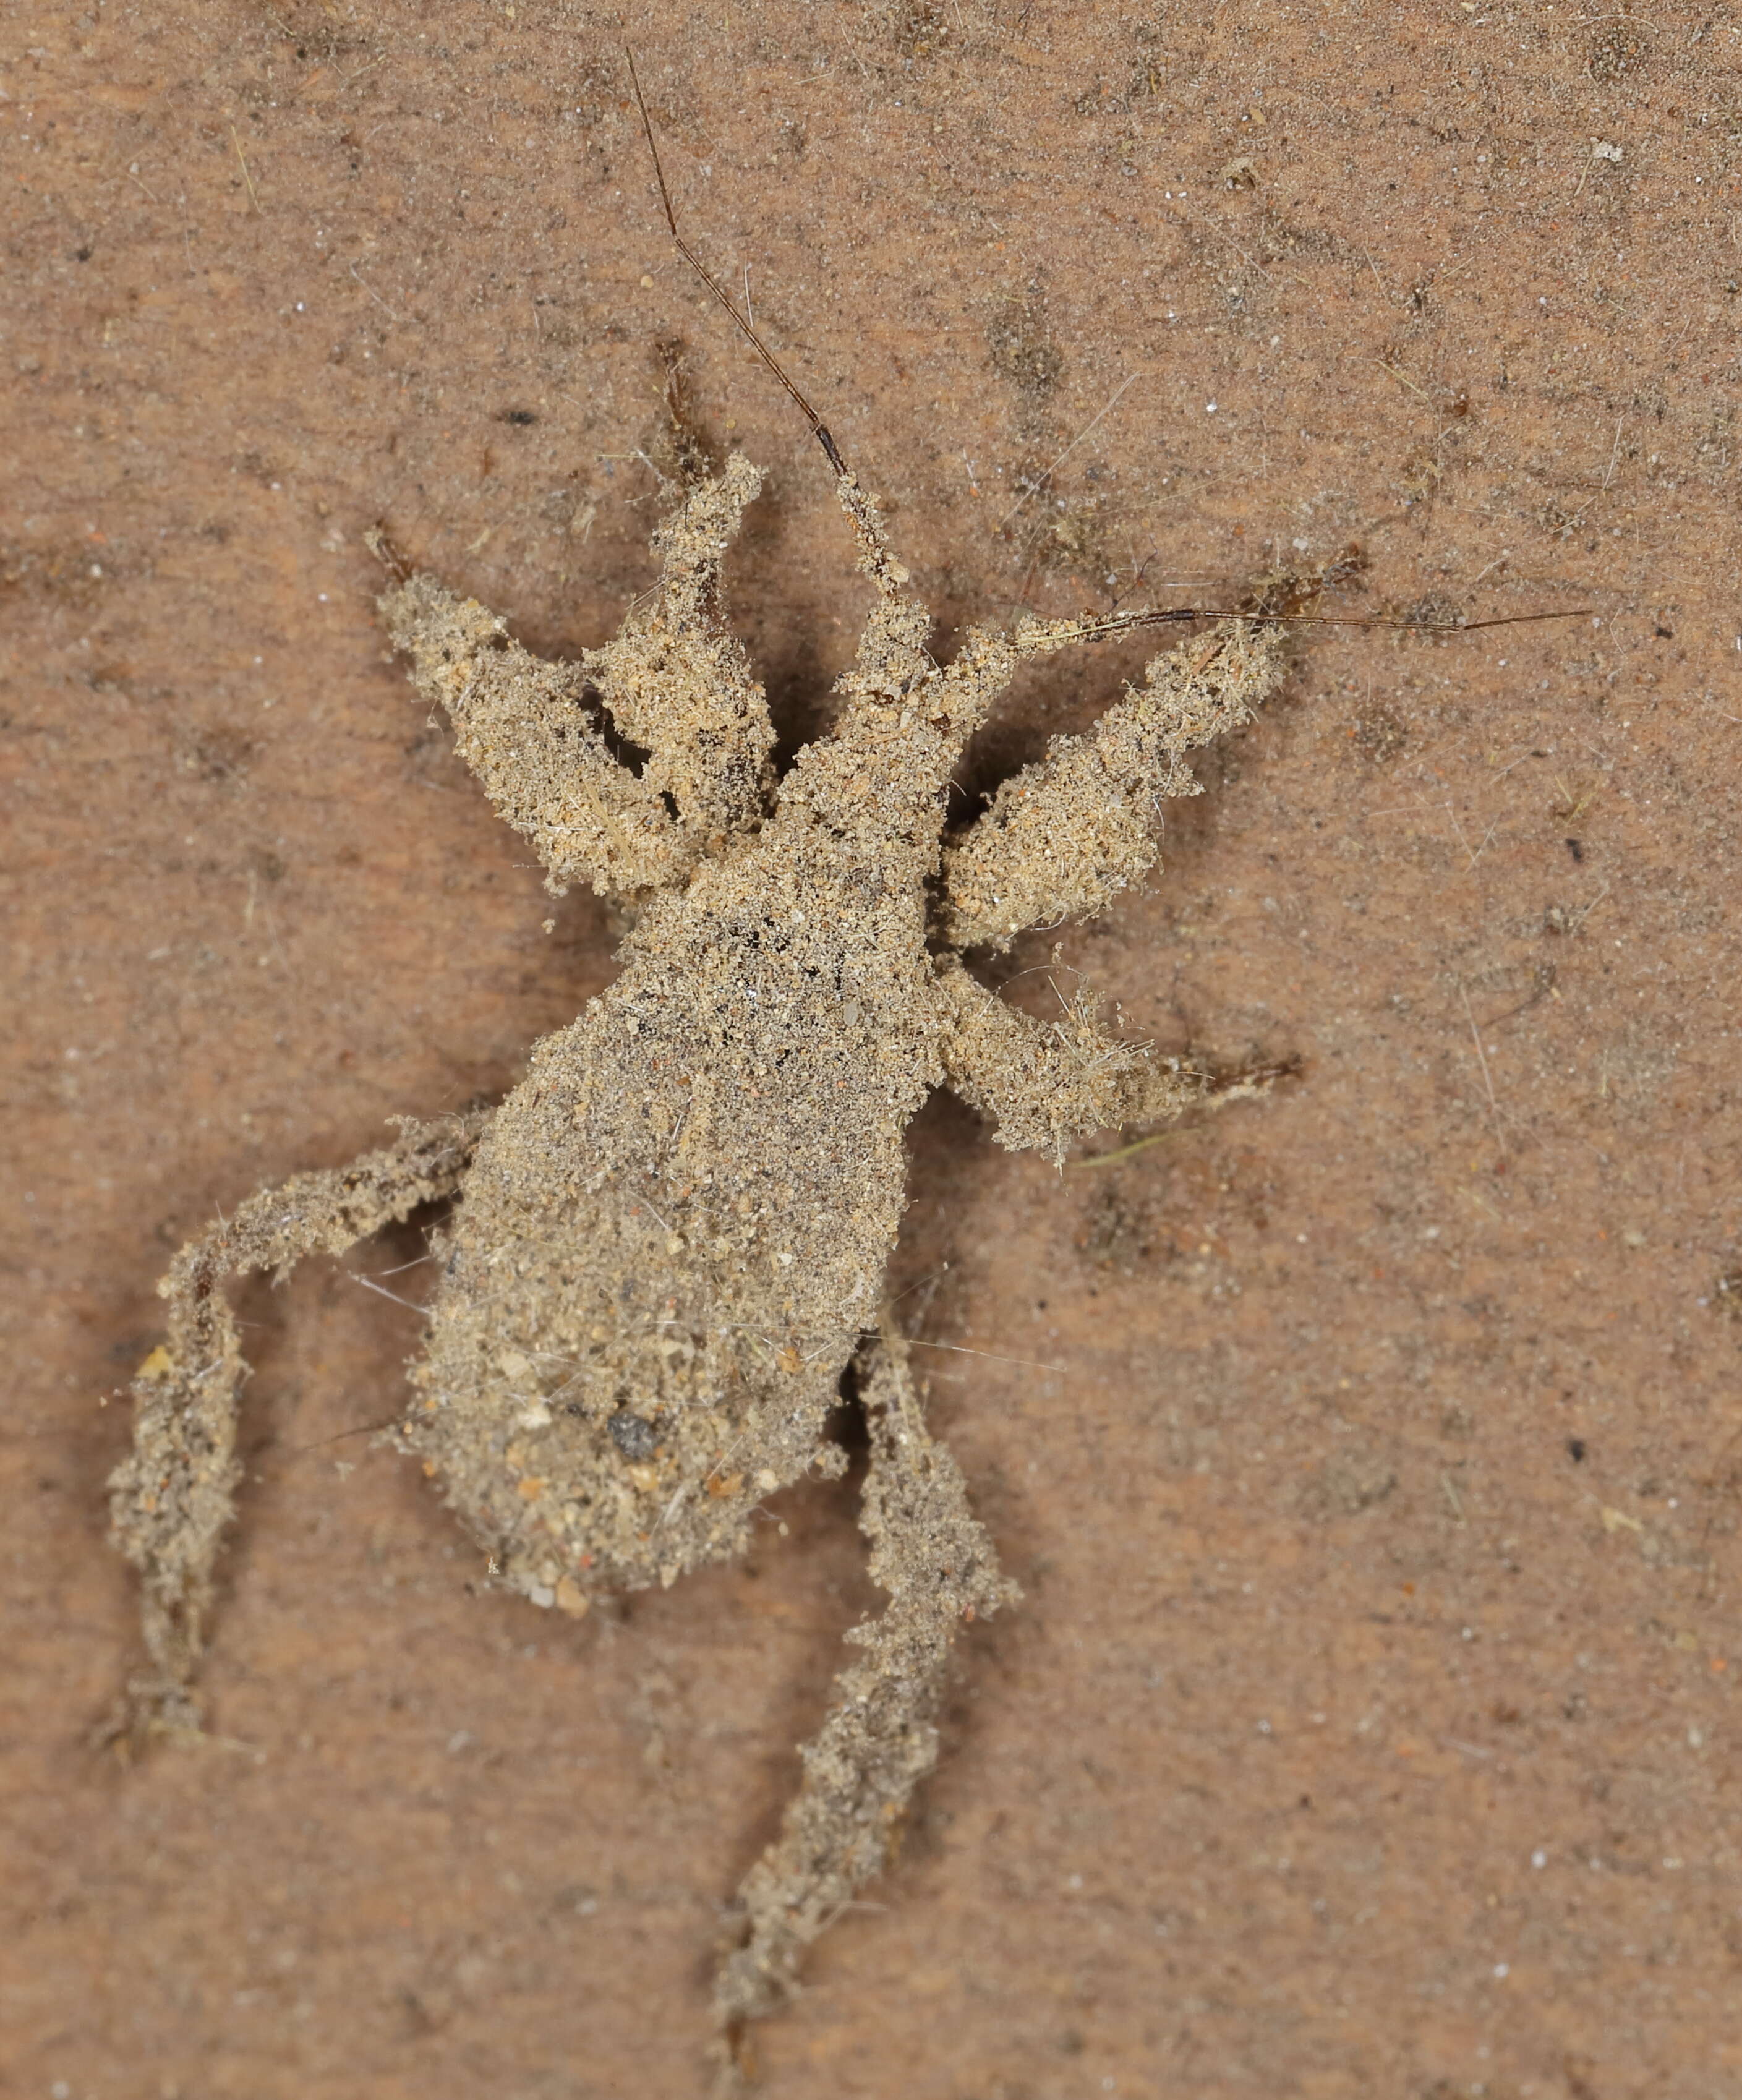 Image of assassin bug